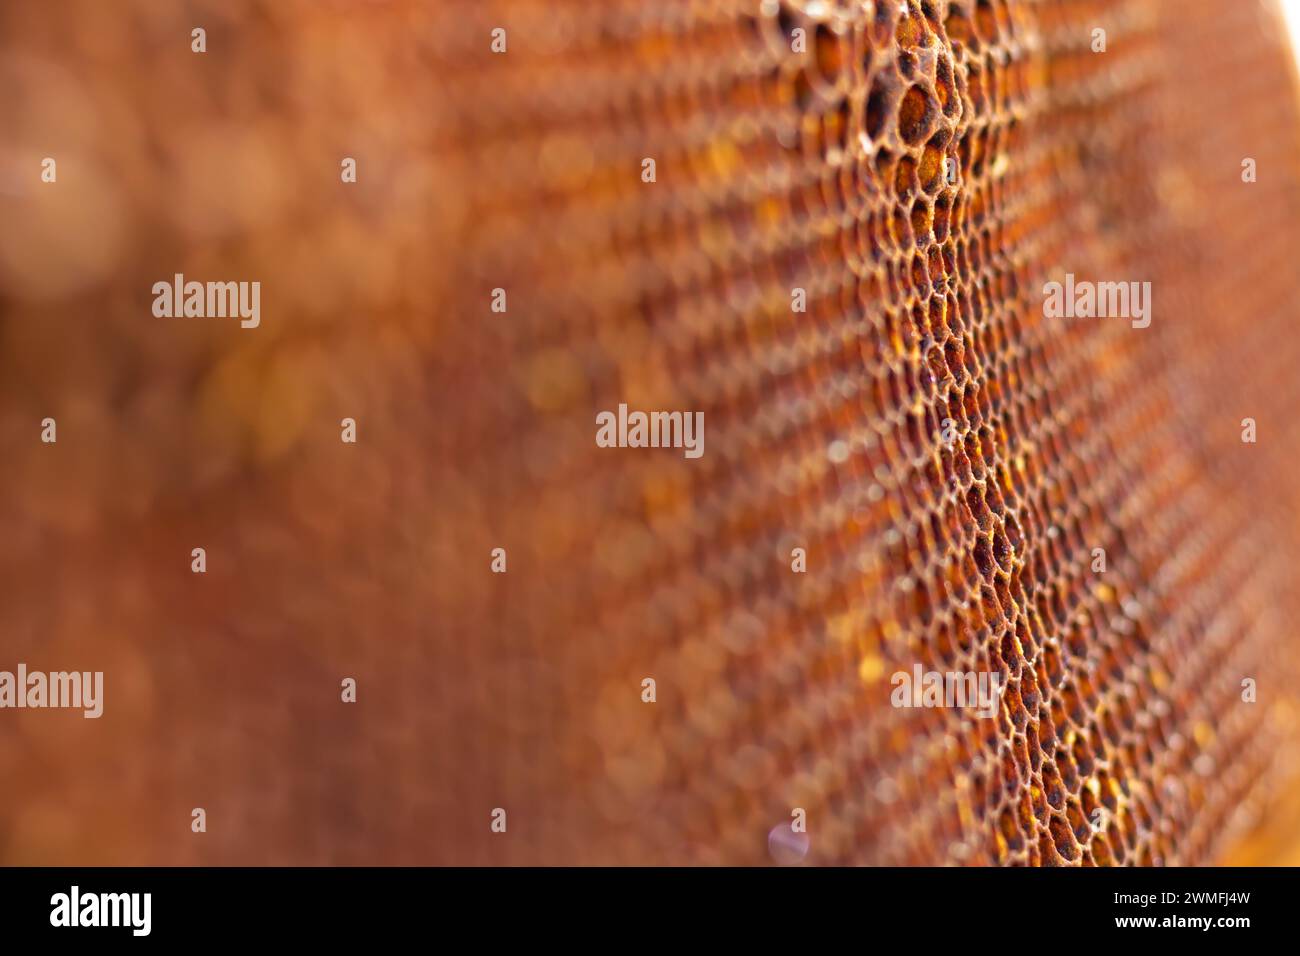 Vista macro de nido de abeja. Apicultura o apicultura concepto foto. Enfoque selectivo en el fondo. Foto de stock